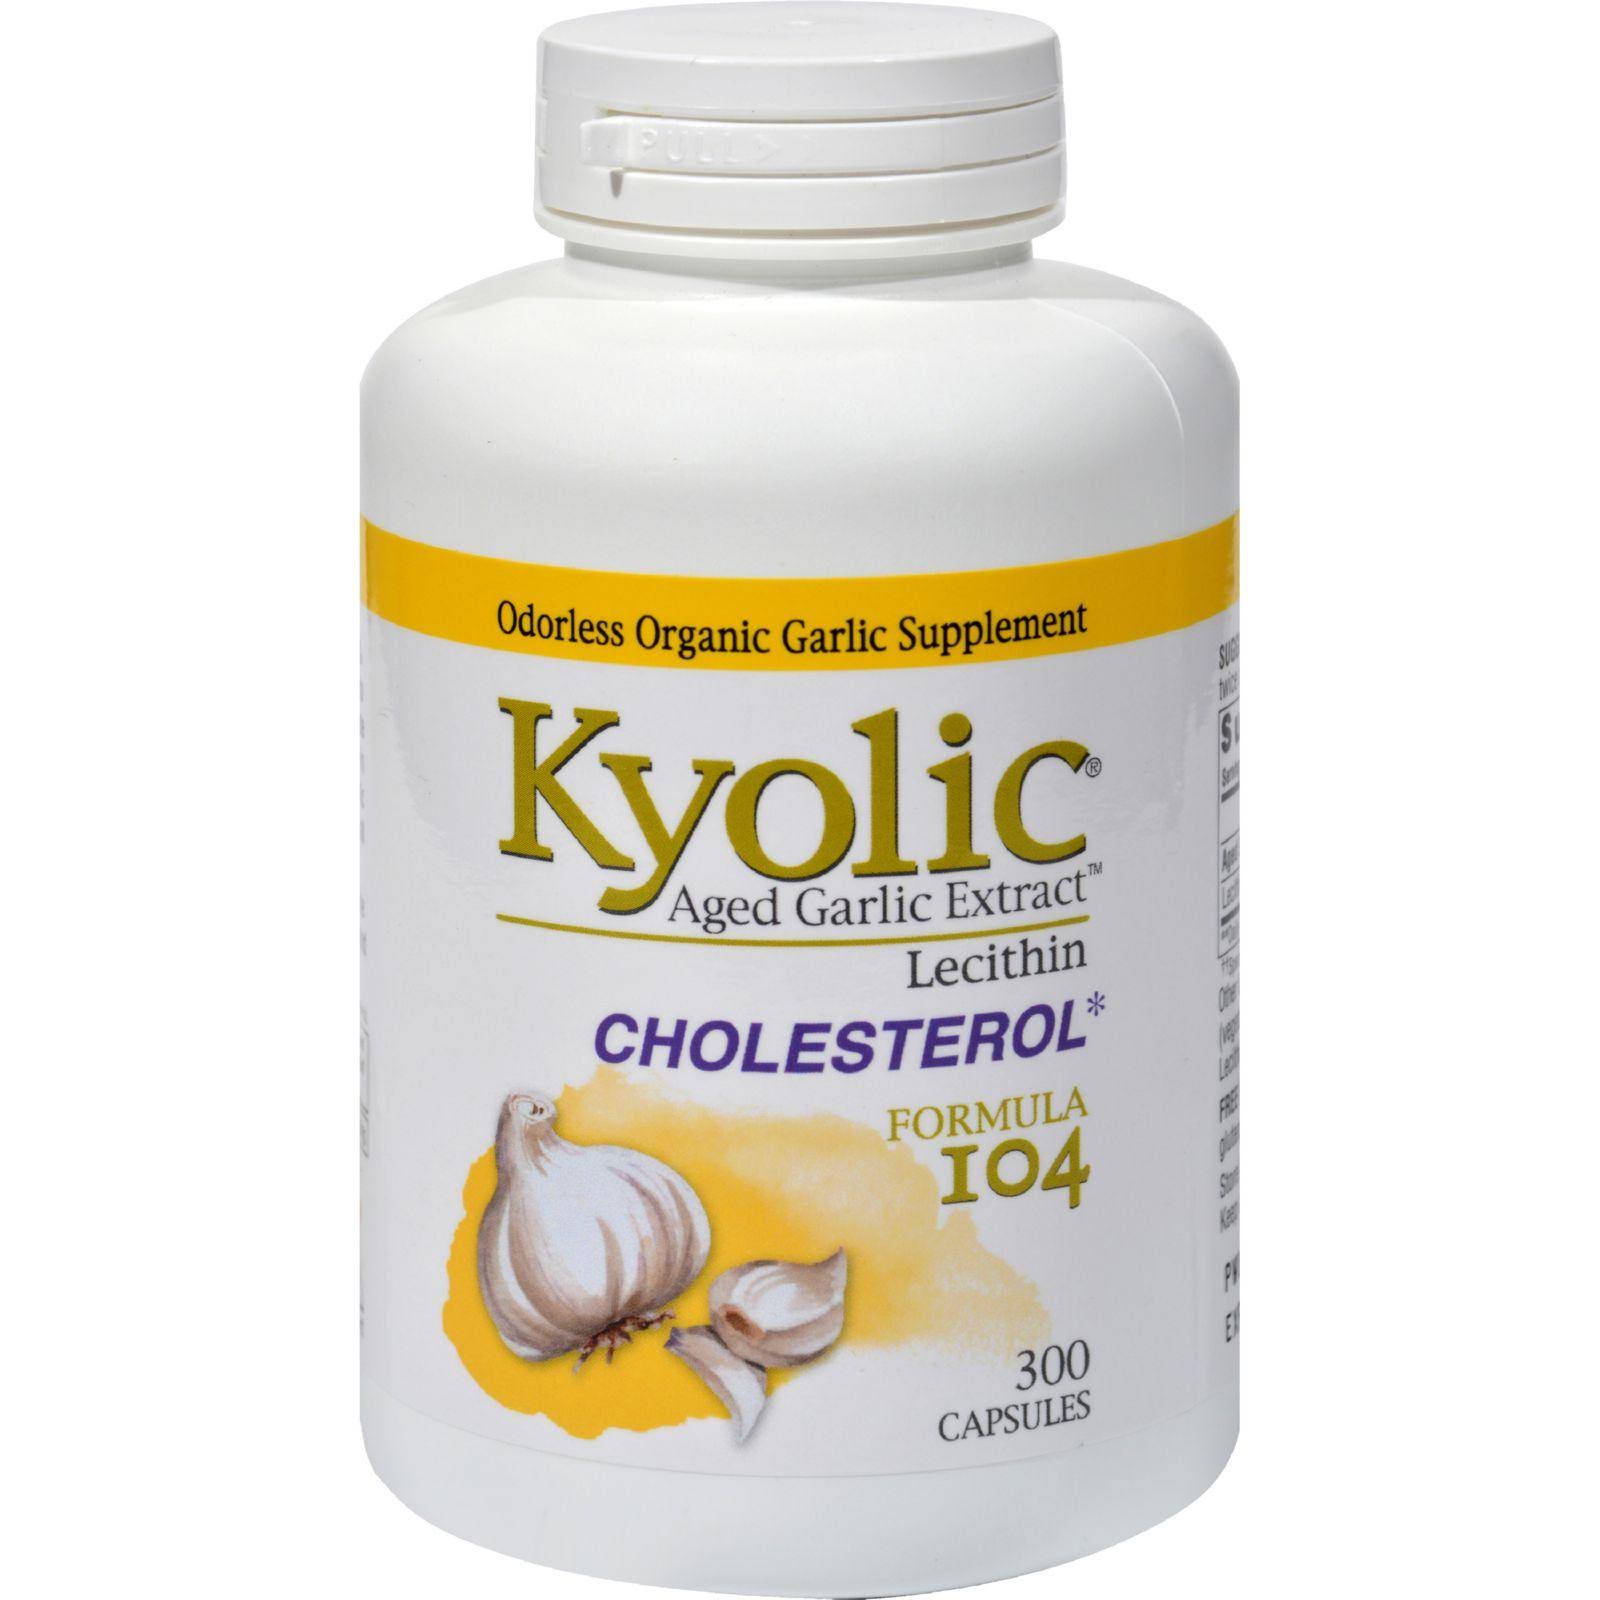 Kyolic Aged Garlic Extract Lecithin Cholesterol Formula 104 - 300 Capsules